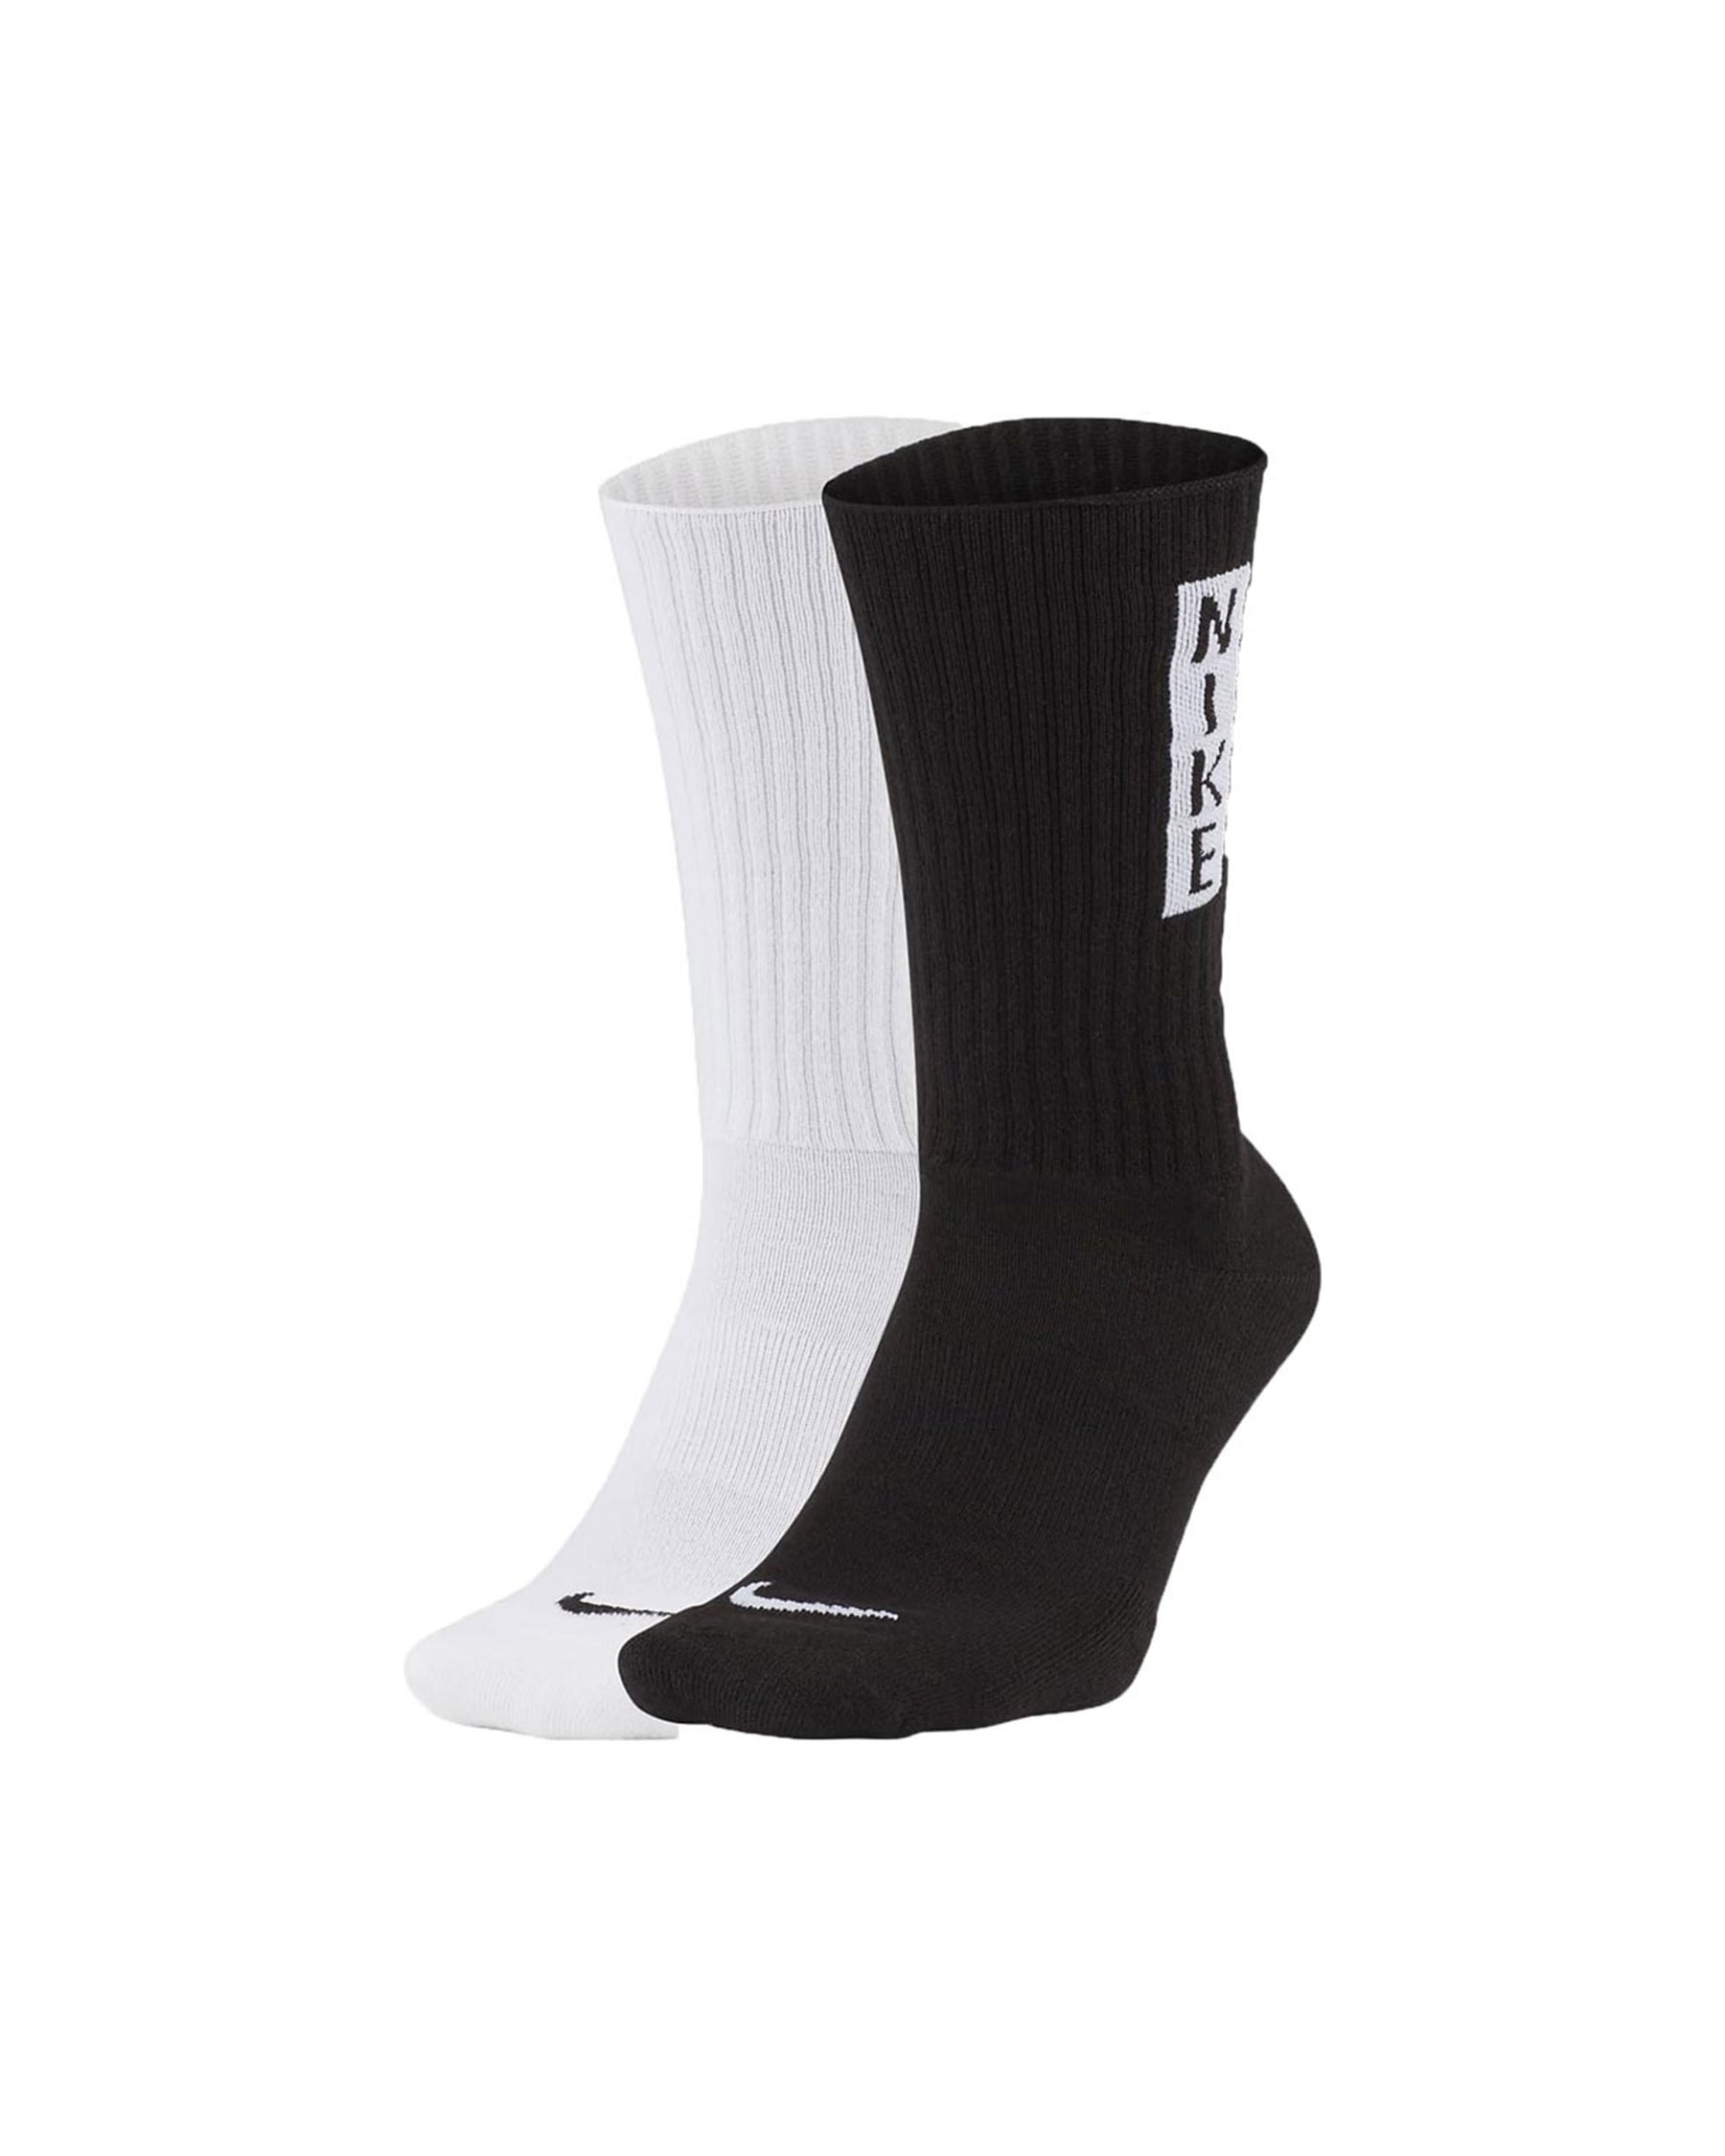 2 Pair Socks Black White CT0534-902